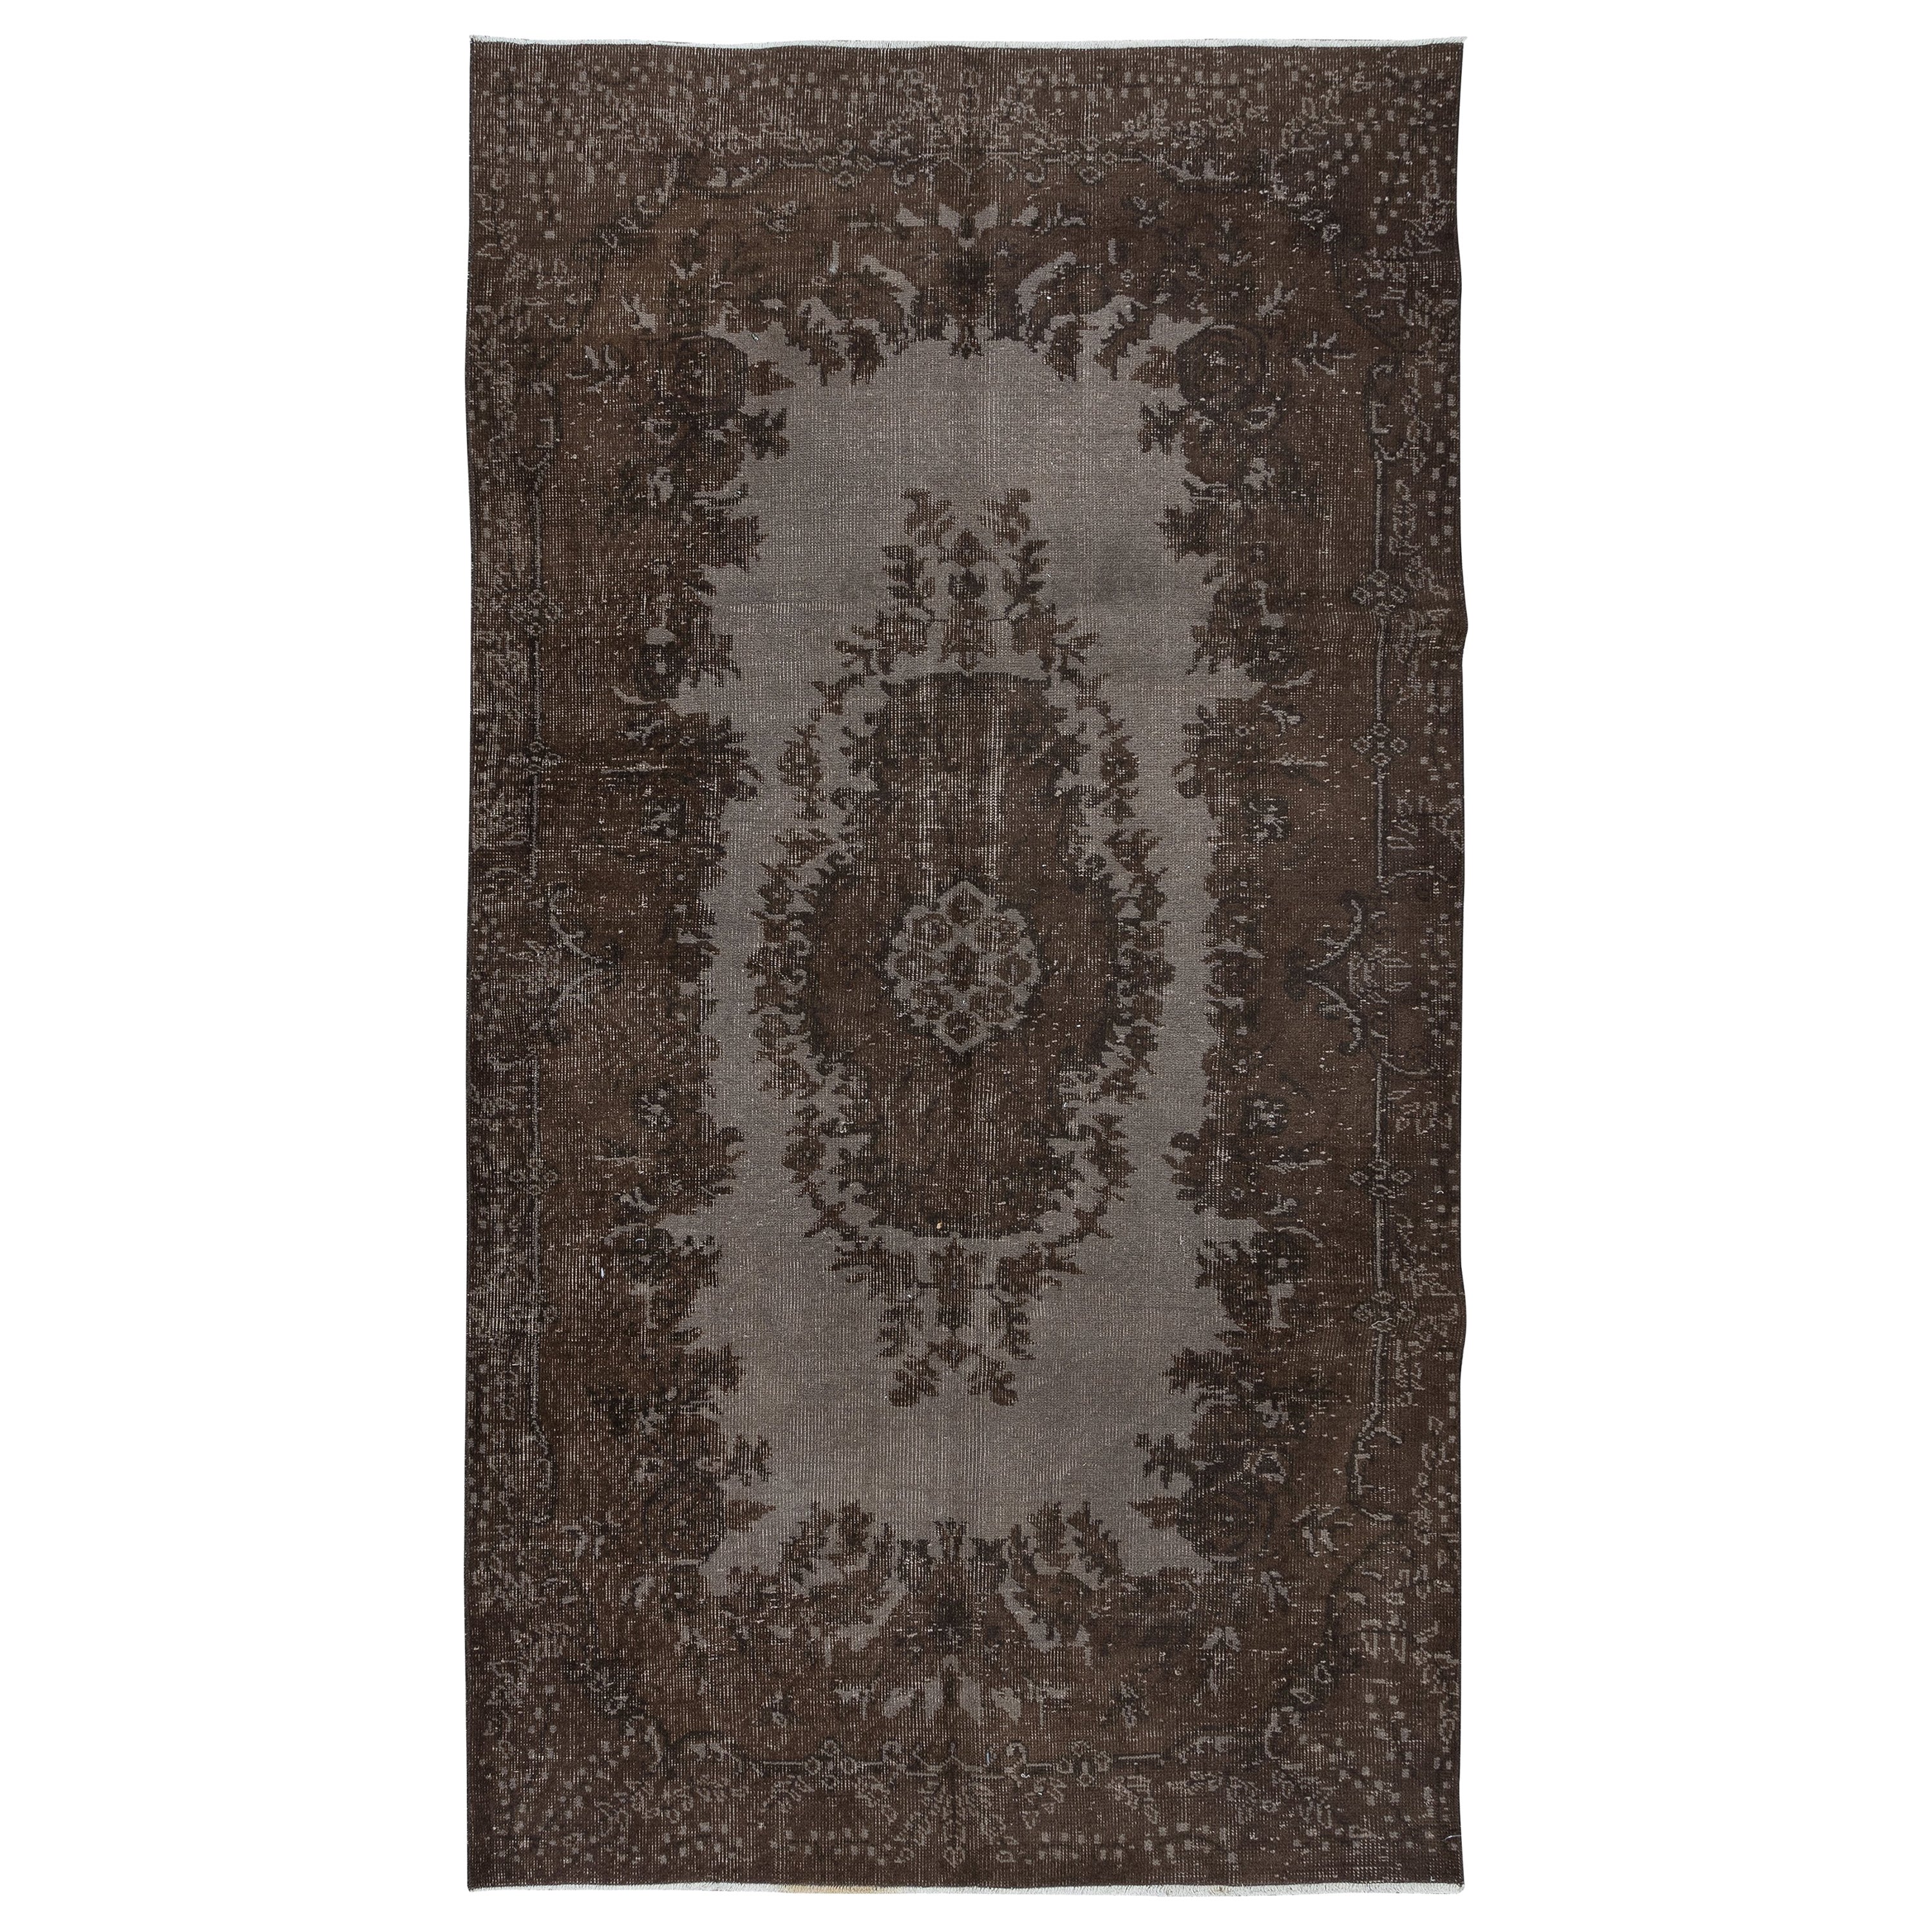 5x8.7 Ft Handmade Turkish Rug in Brown, Modern Home Decor Carpet with Medallion